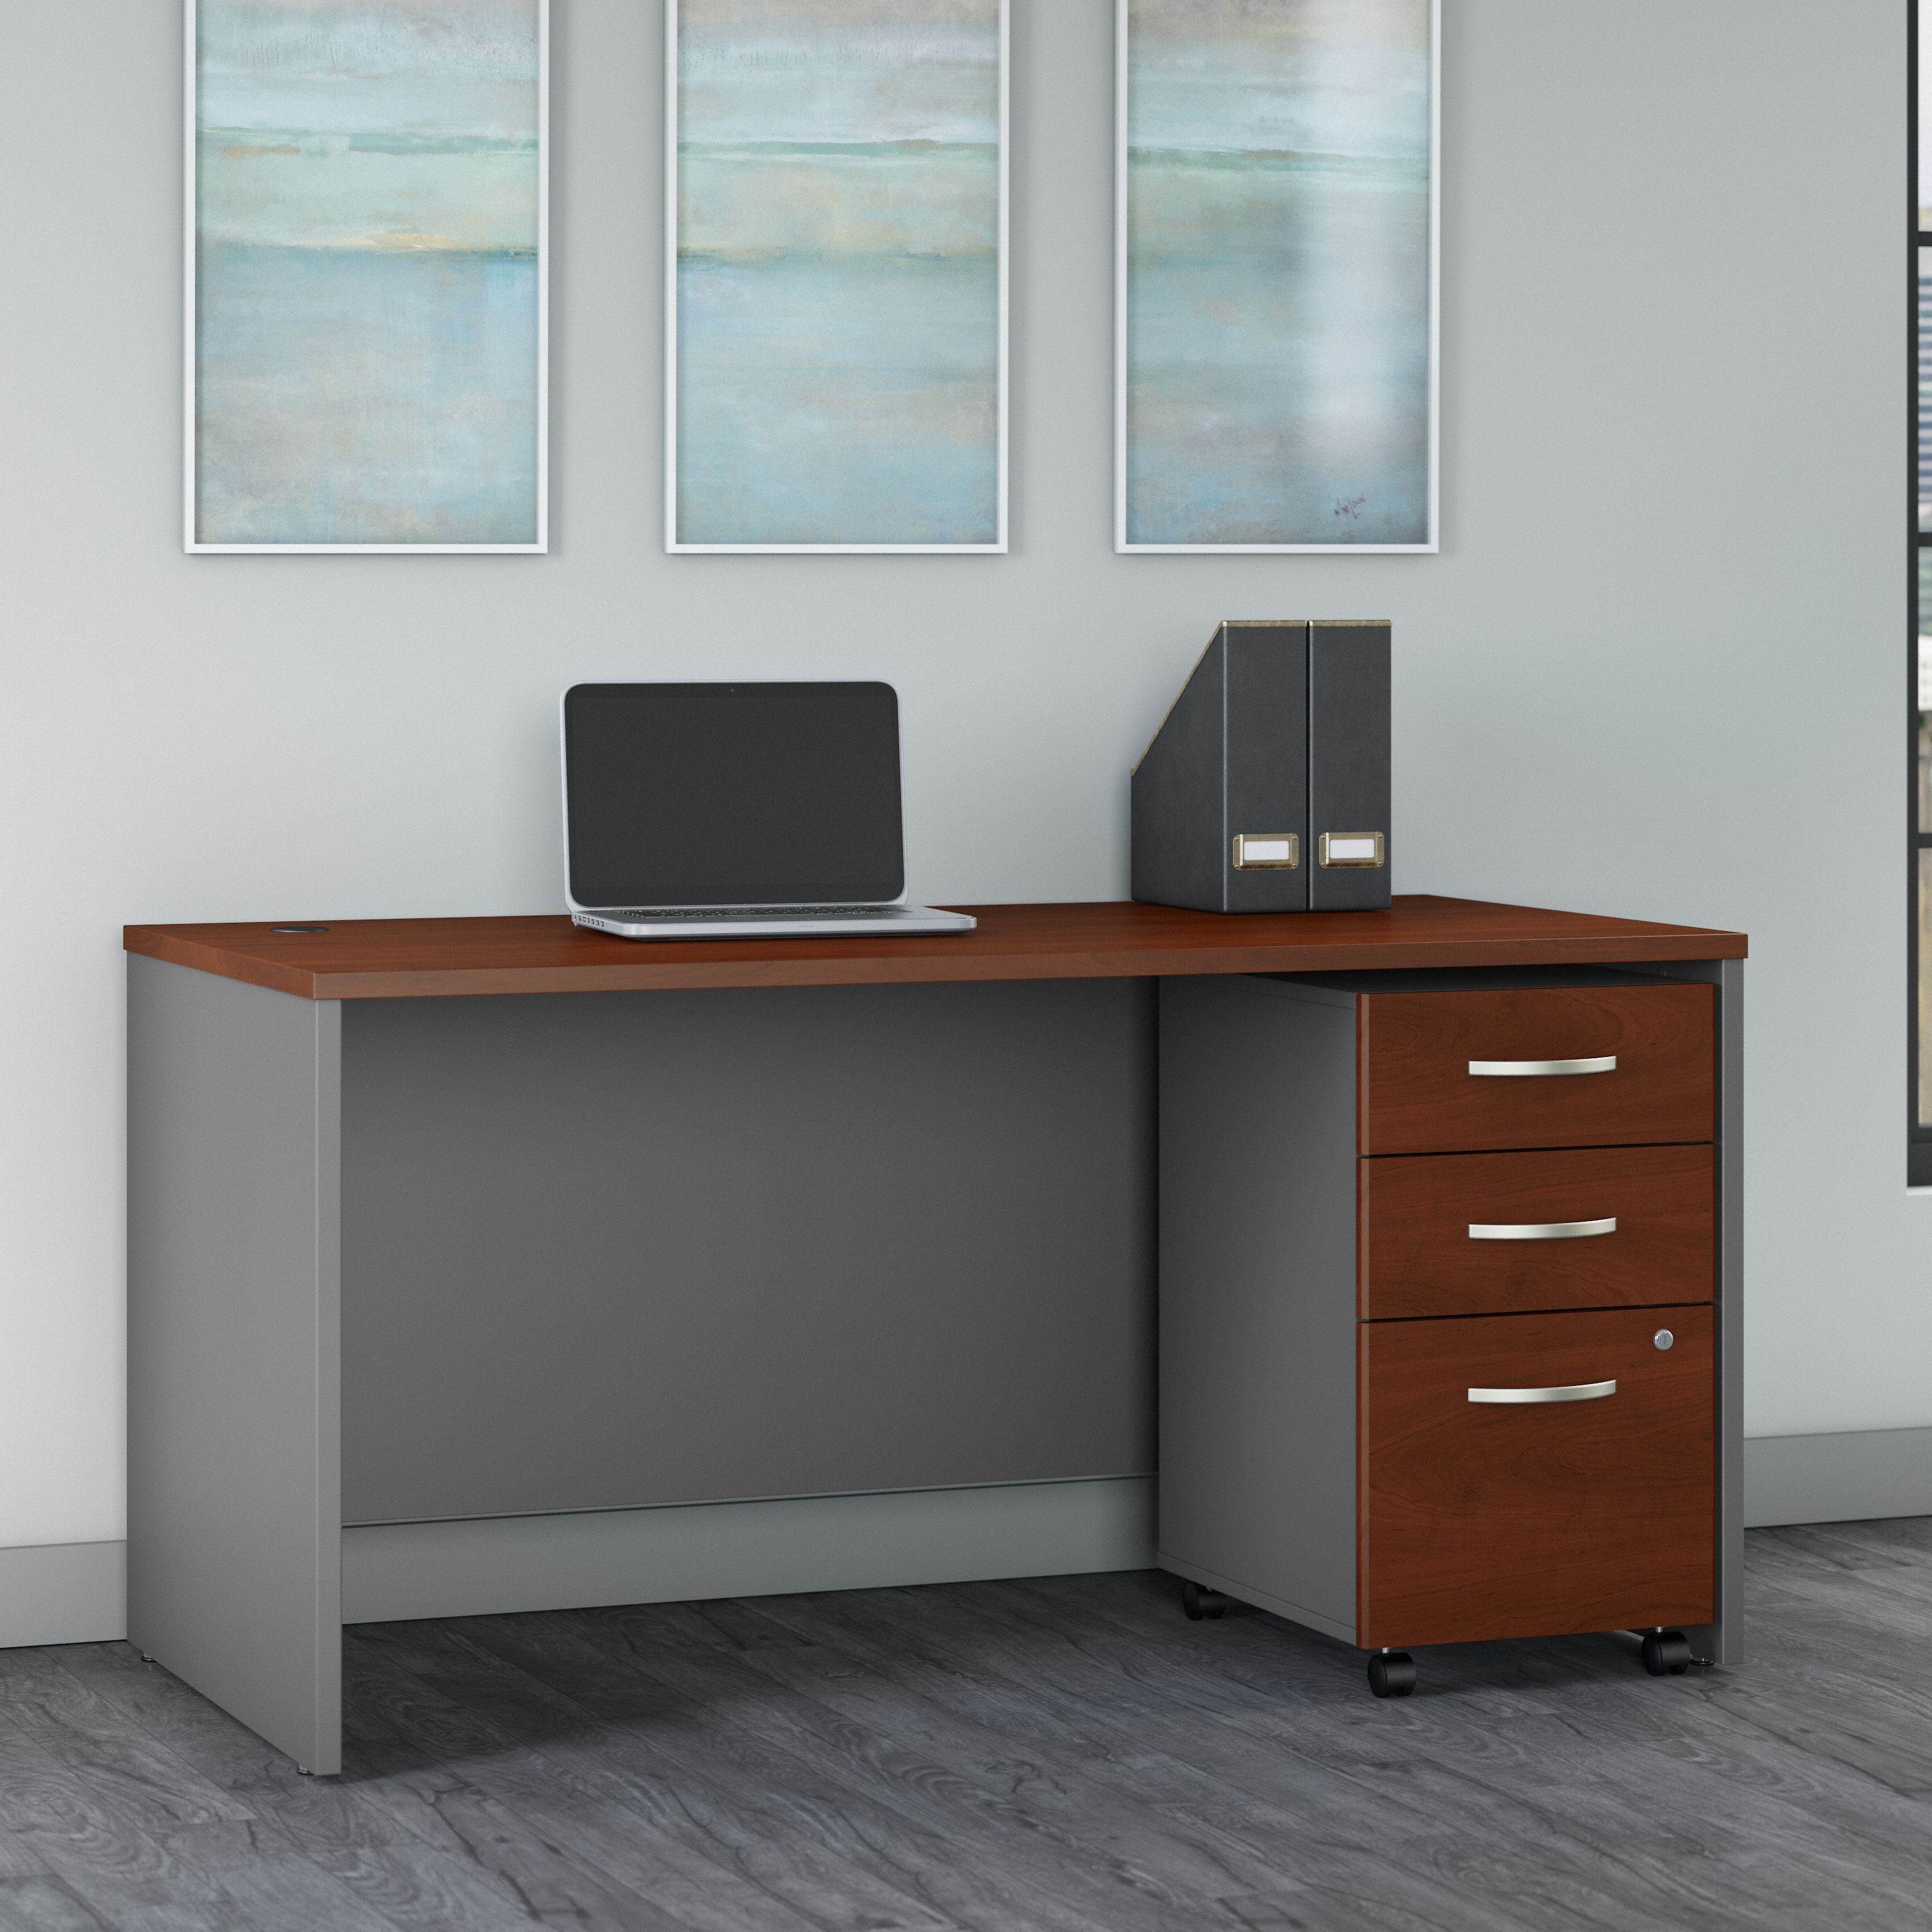 Shop Bush Business Furniture Series C 60W x 30D Office Desk with 3 Drawer Mobile File Cabinet 01 SRC144HCSU #color_hansen cherry/graphite gray